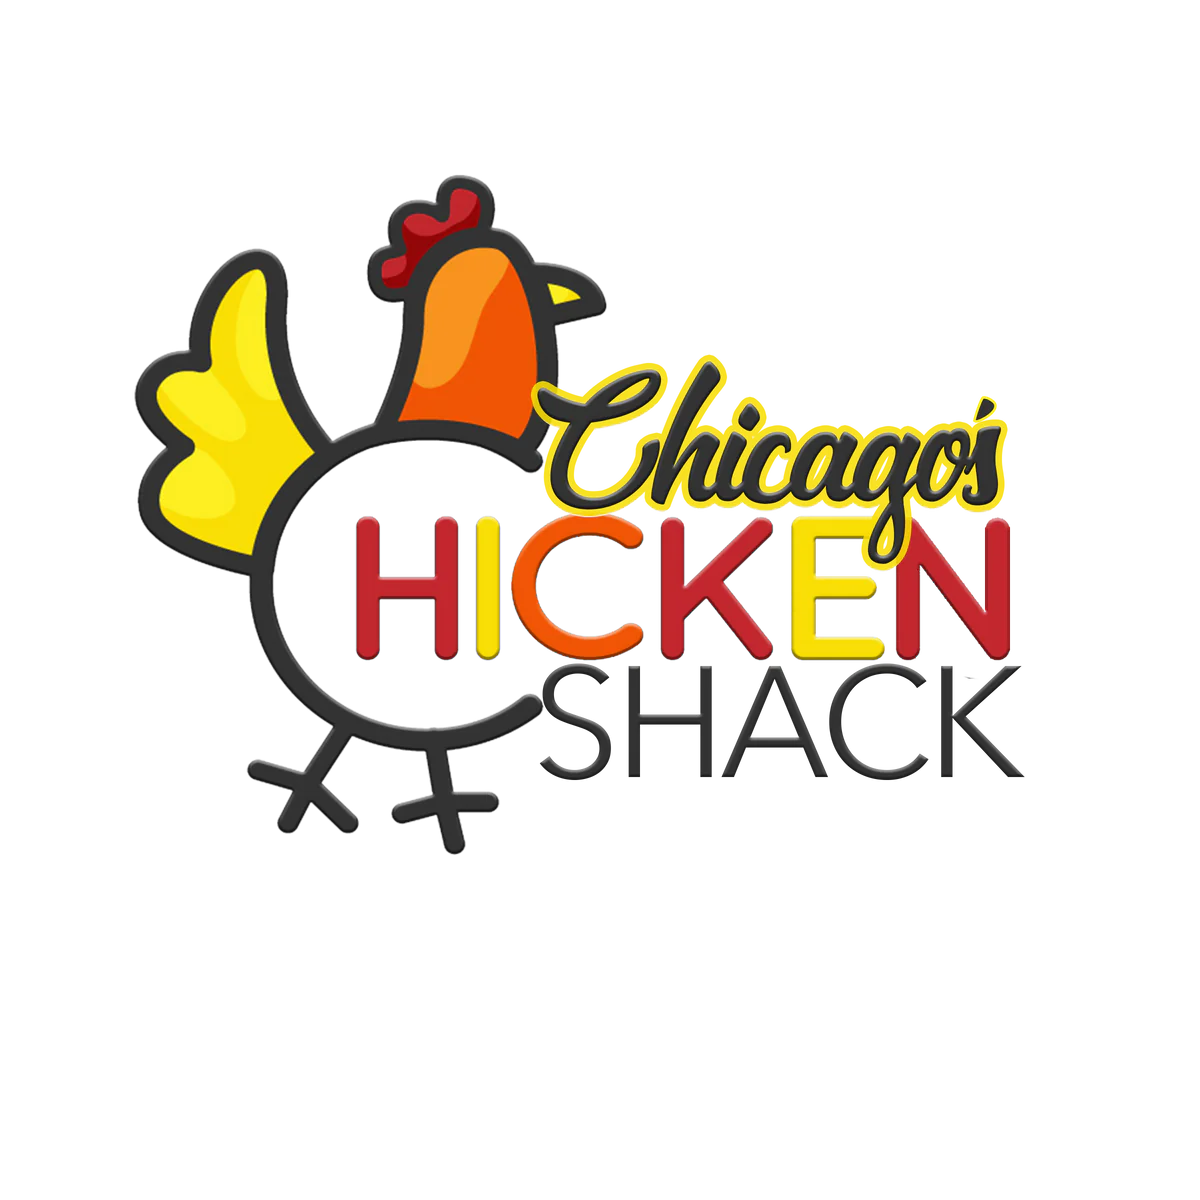 Chicago Chicken Shack logo